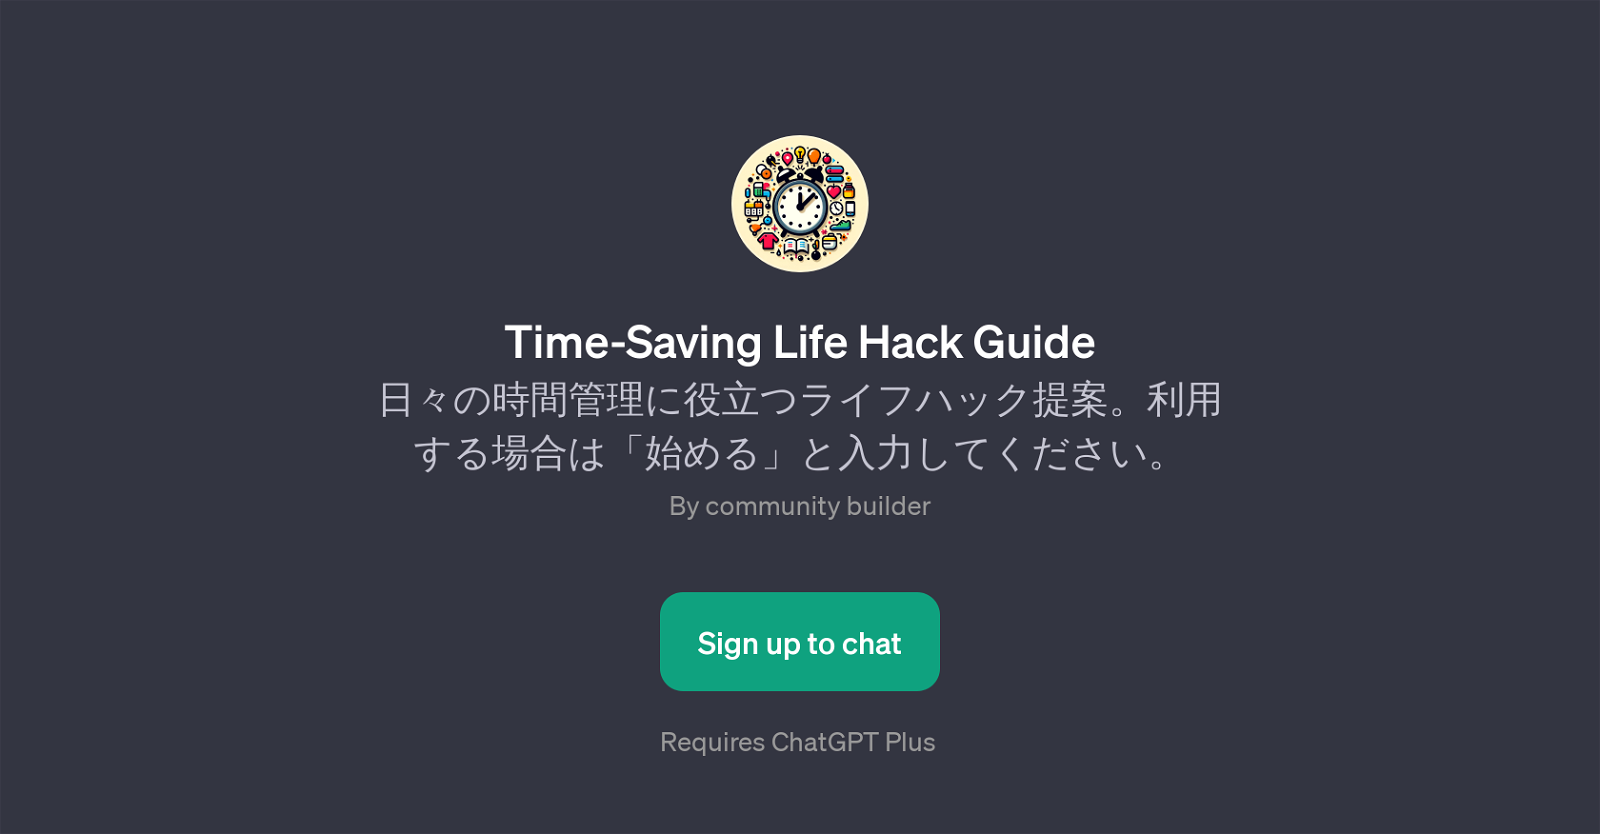 Time-Saving Life Hack Guide website